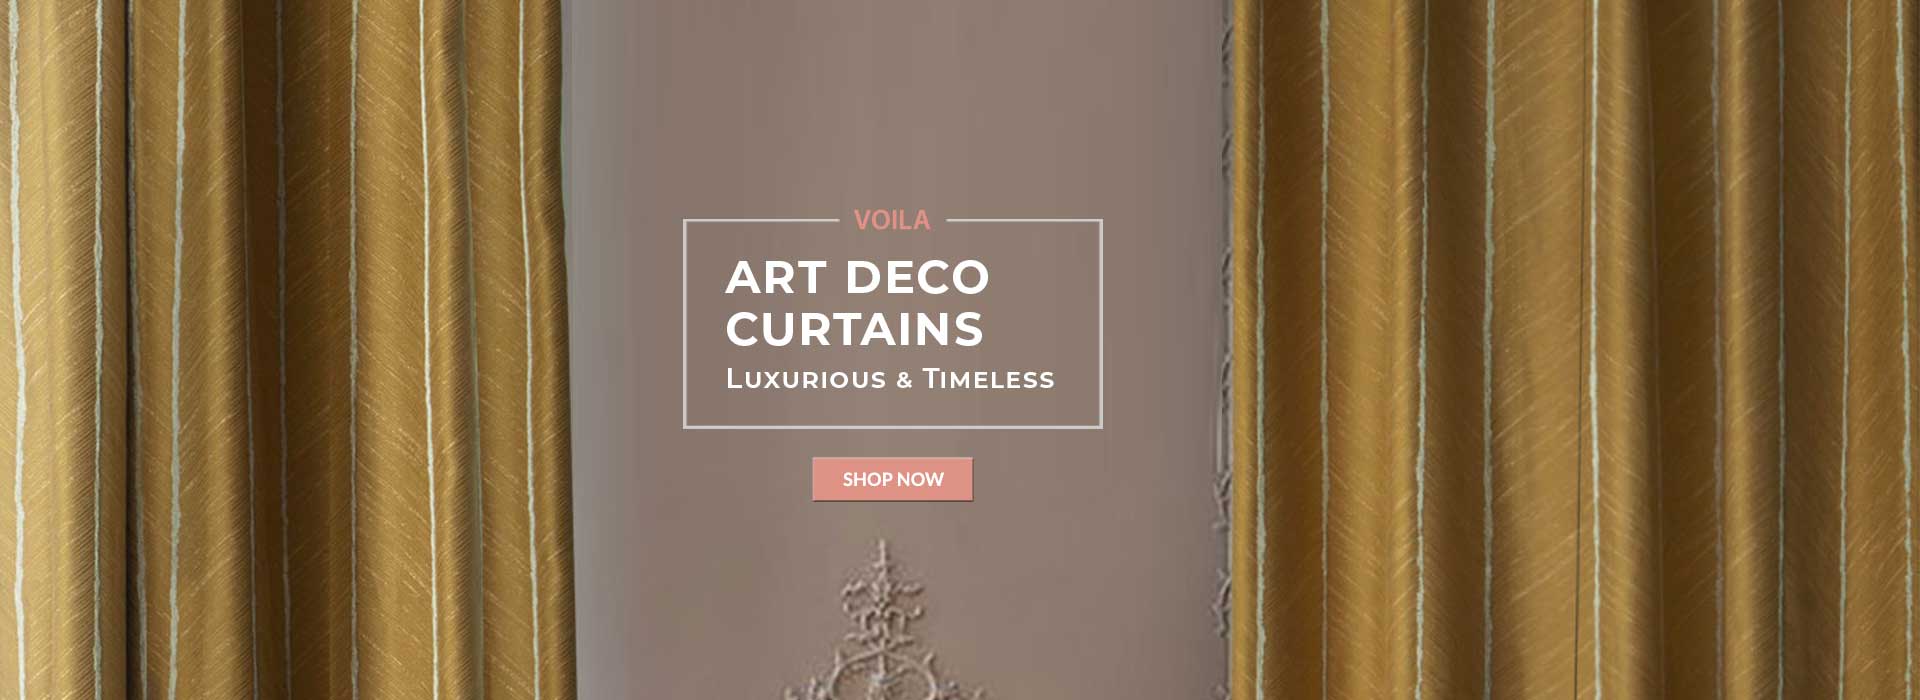 Art Deco Curtains